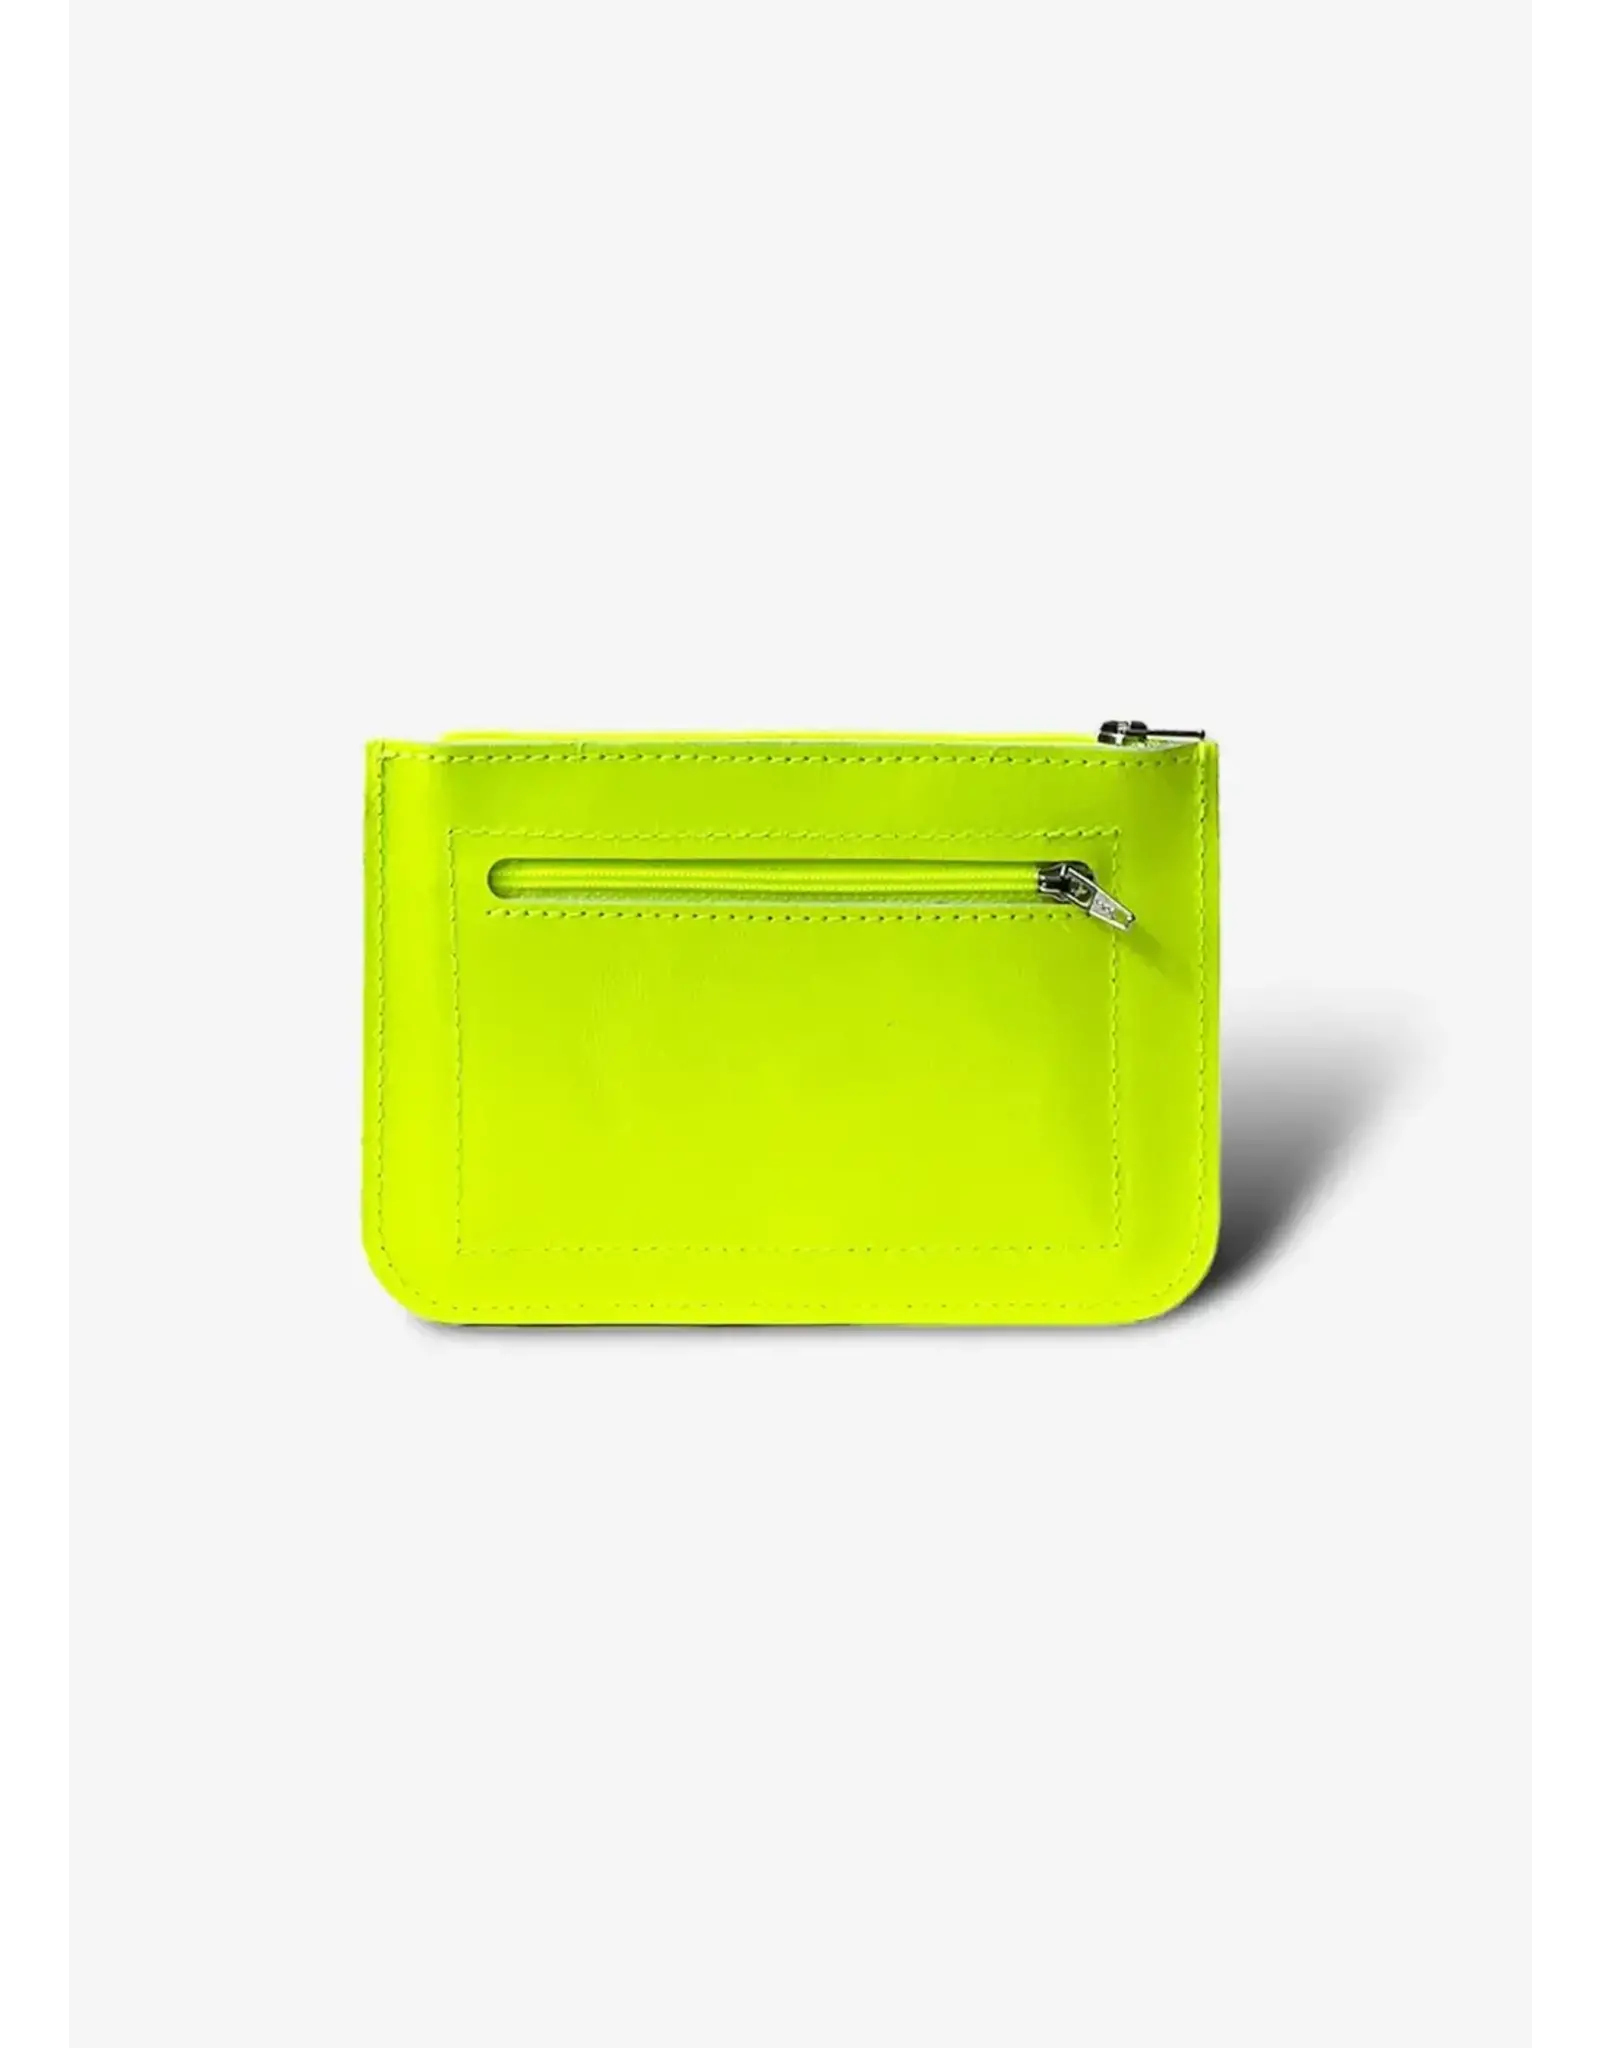 Puc Easy Wallet Big - Neon Yellow